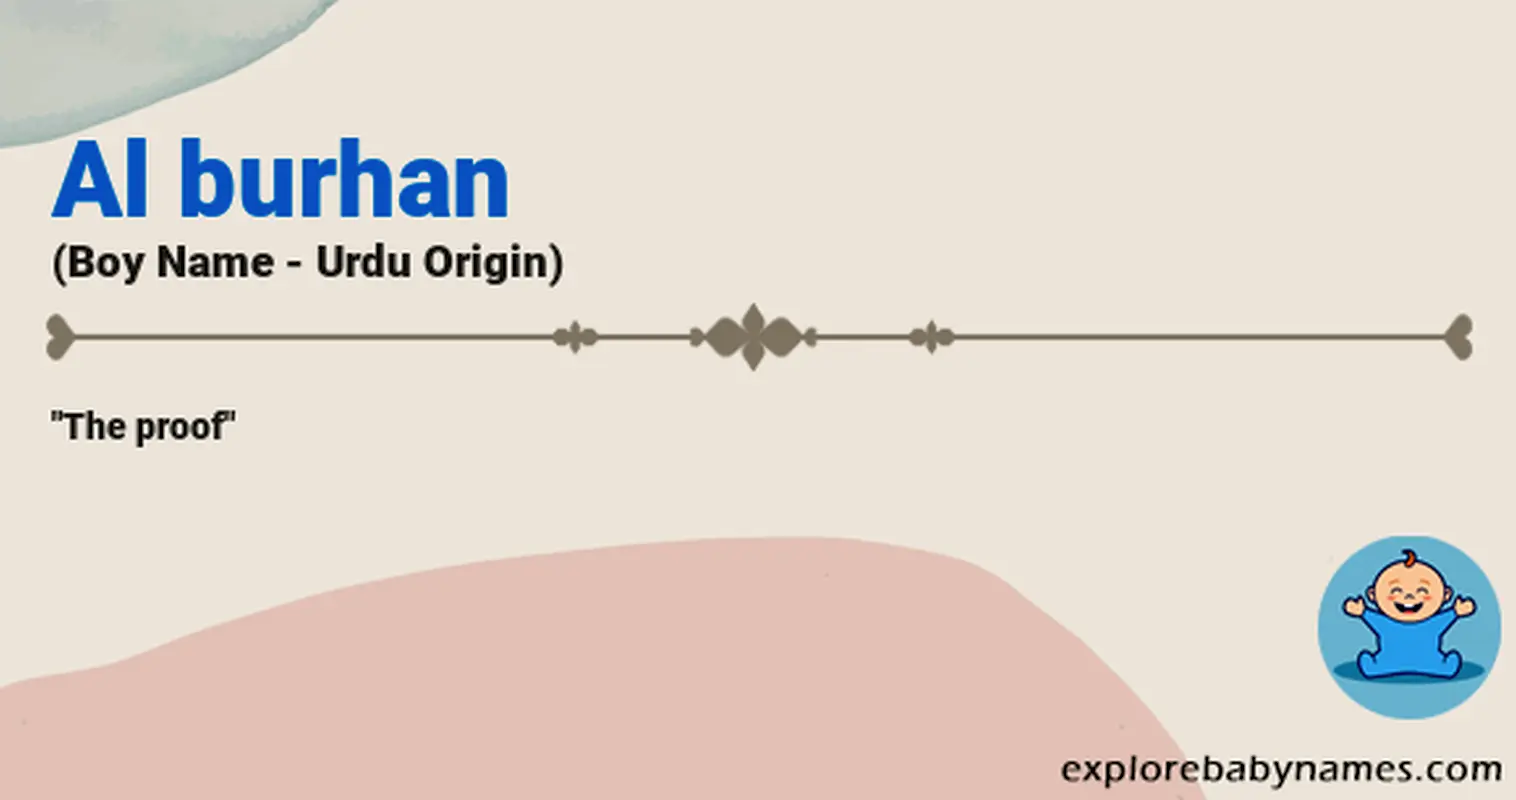 Meaning of Al burhan